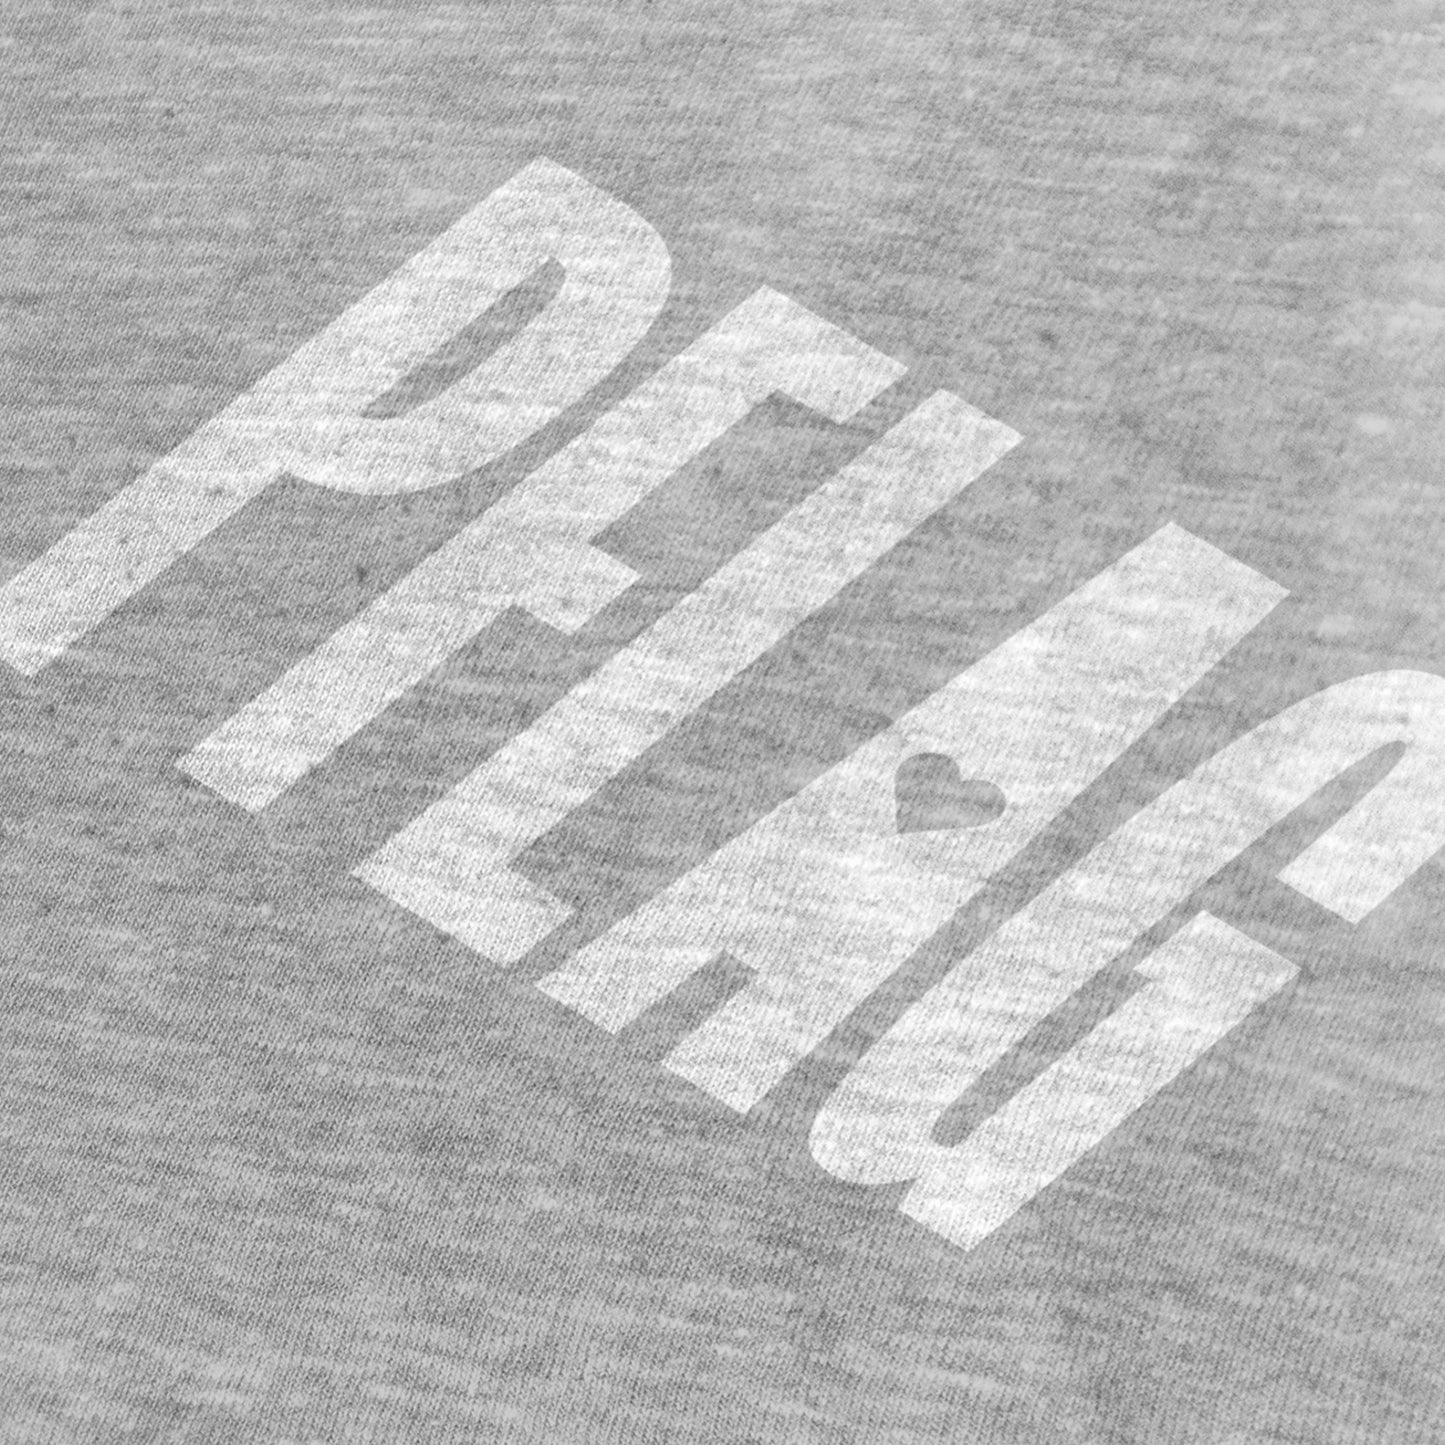 PFLAG Logo - Fitted-Cut Crewneck Short Sleeve T-Shirt